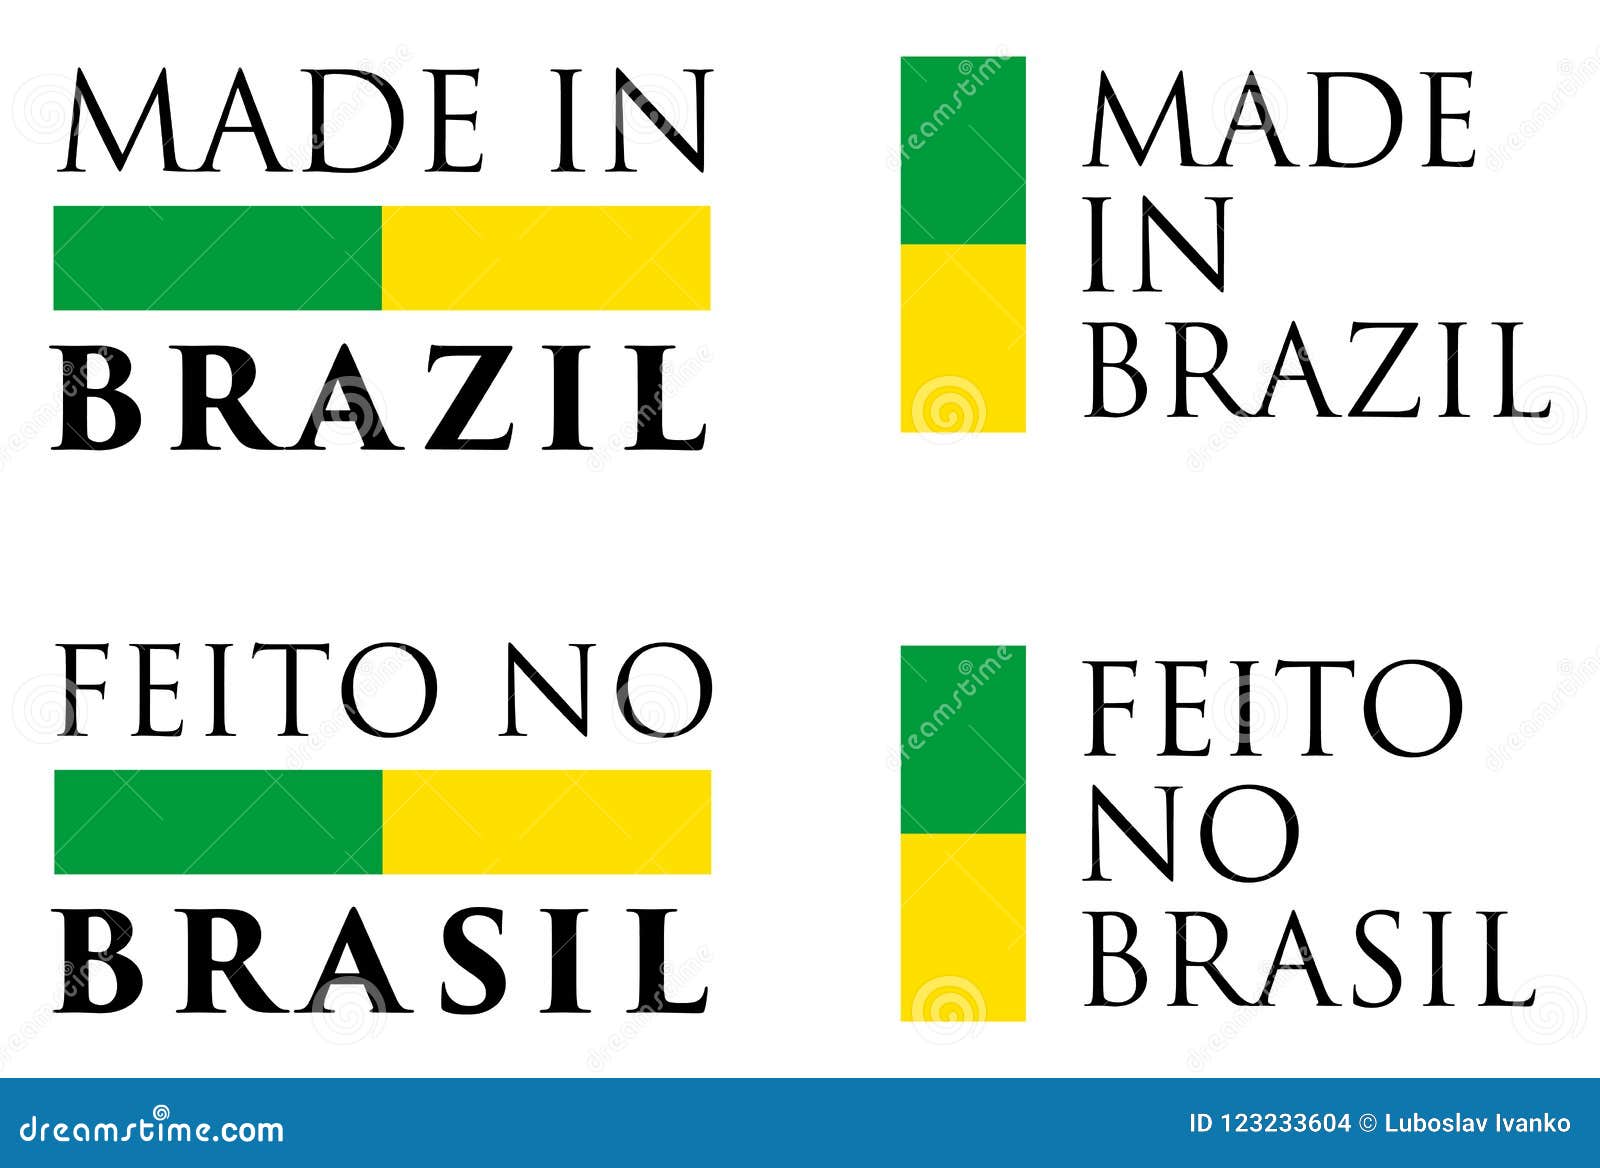 simple made in brazil / feito no brasil portuguese translation